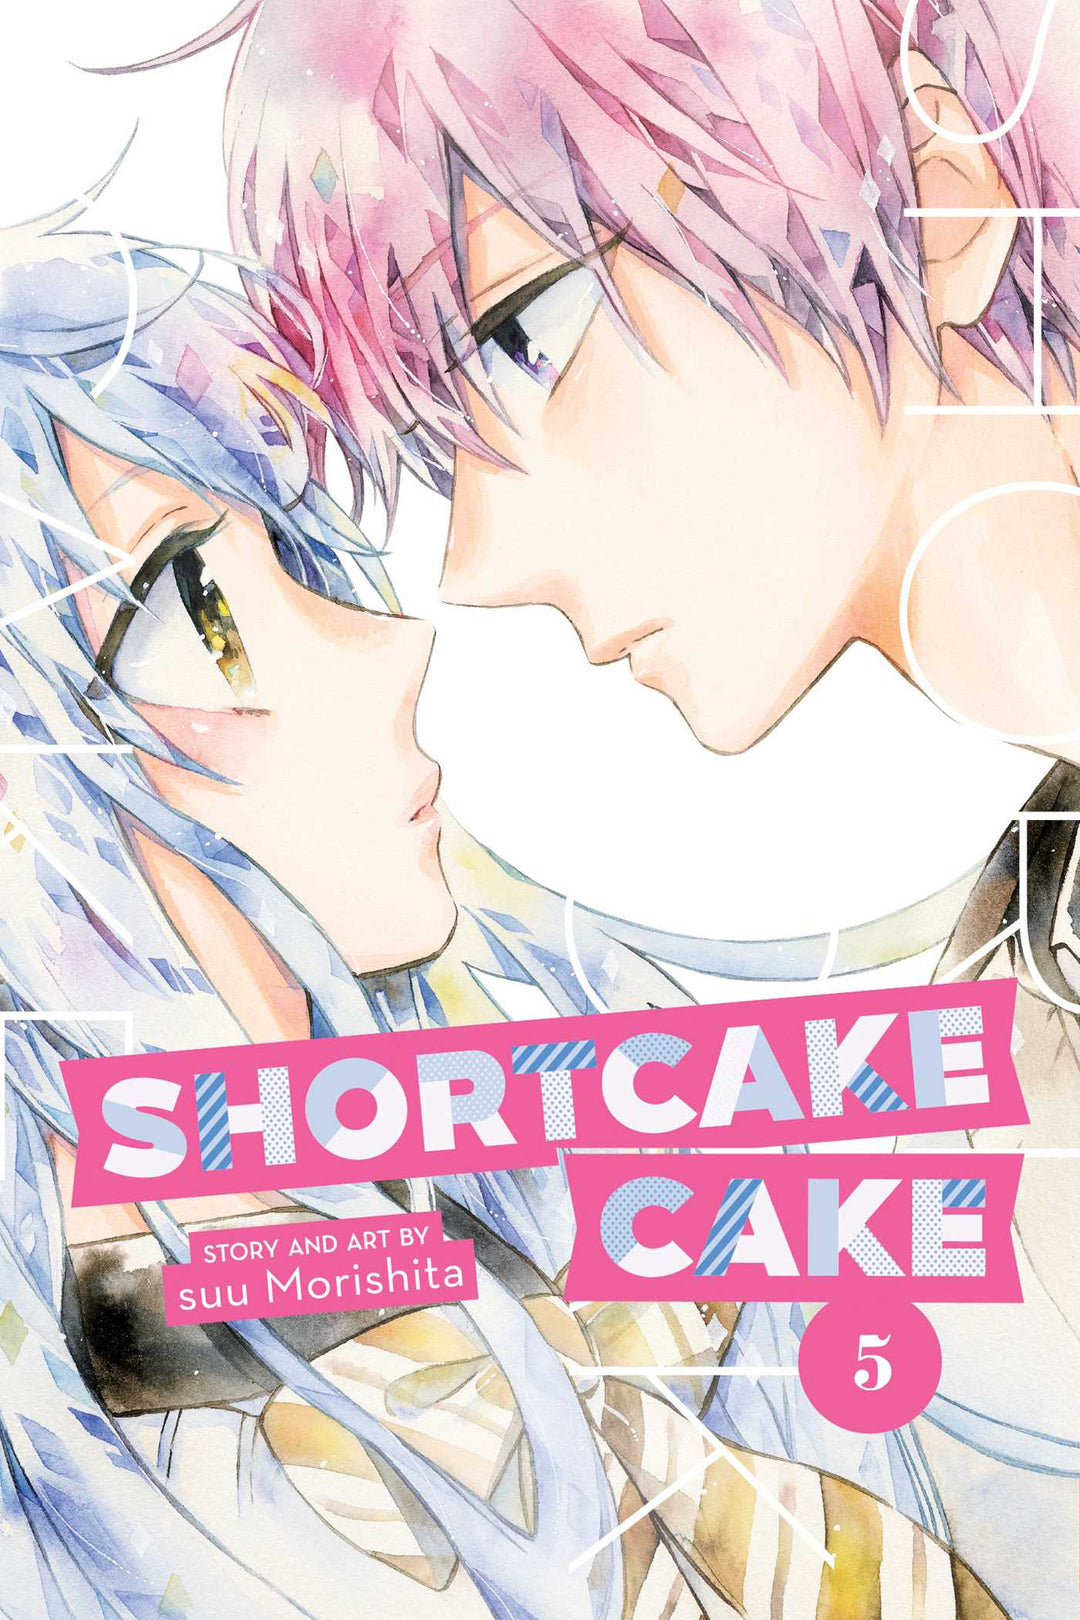 Shortcake Cake GN VOL 05